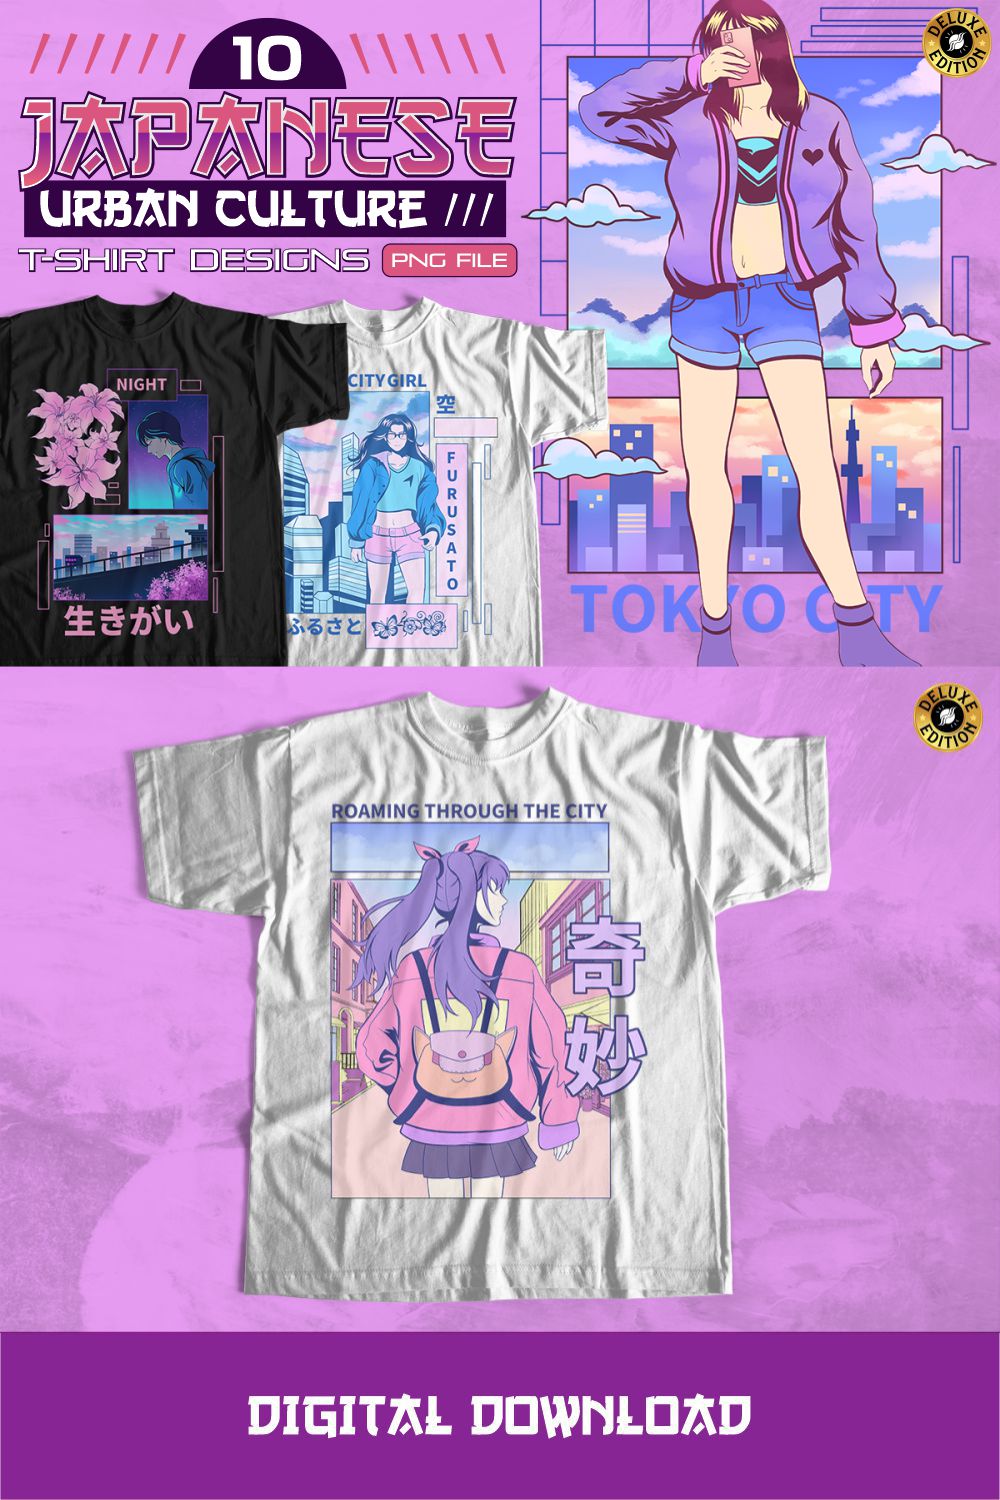 Japanese Urban Street Culture T-shirt Designs PNG Bundle pinterest preview image.